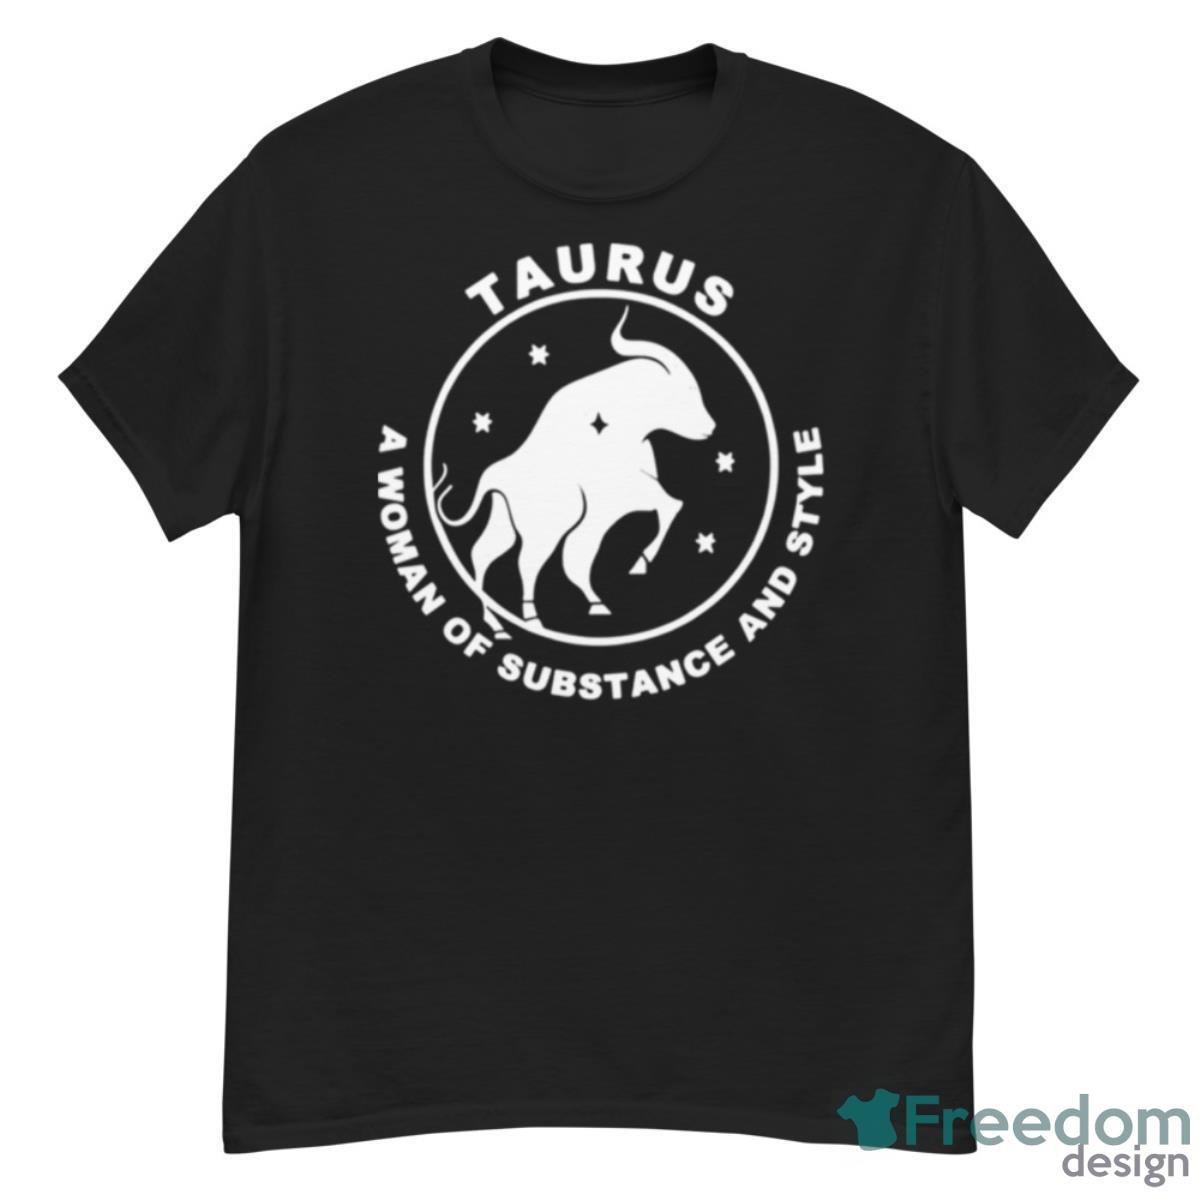 Substance Woman Taurus Zodiac Sign shirt - G500 Men’s Classic T-Shirt